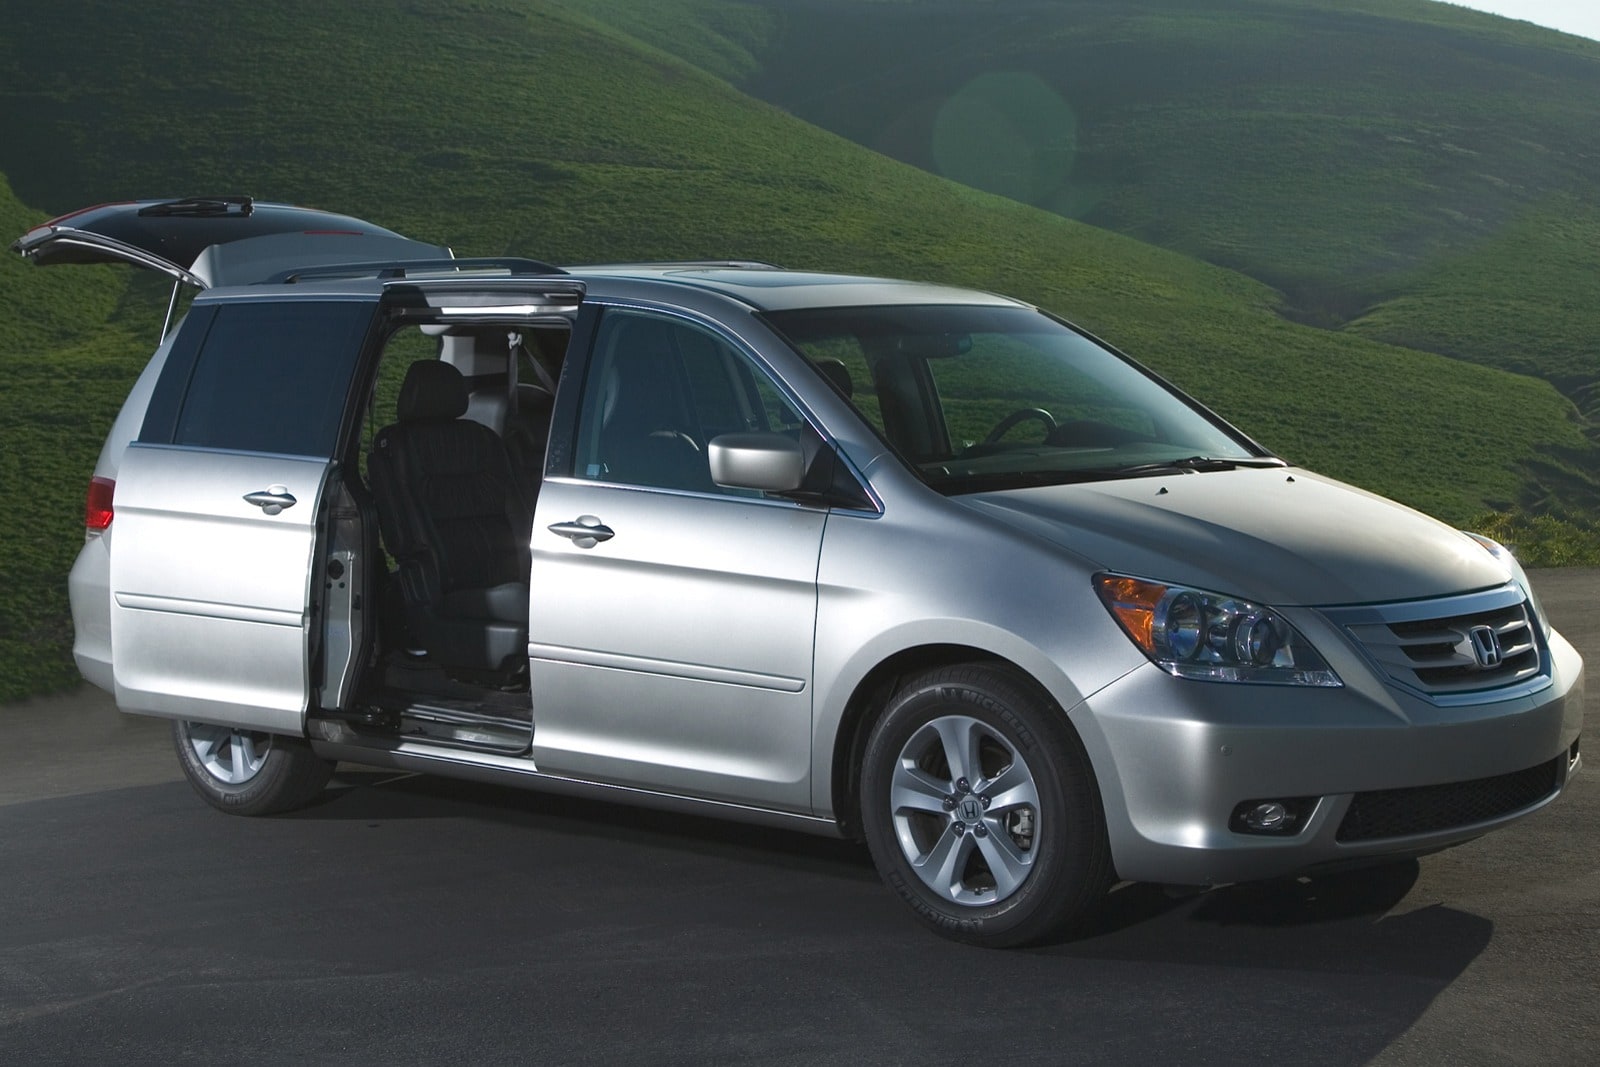 2008 Honda Odyssey Review & Ratings | Edmunds